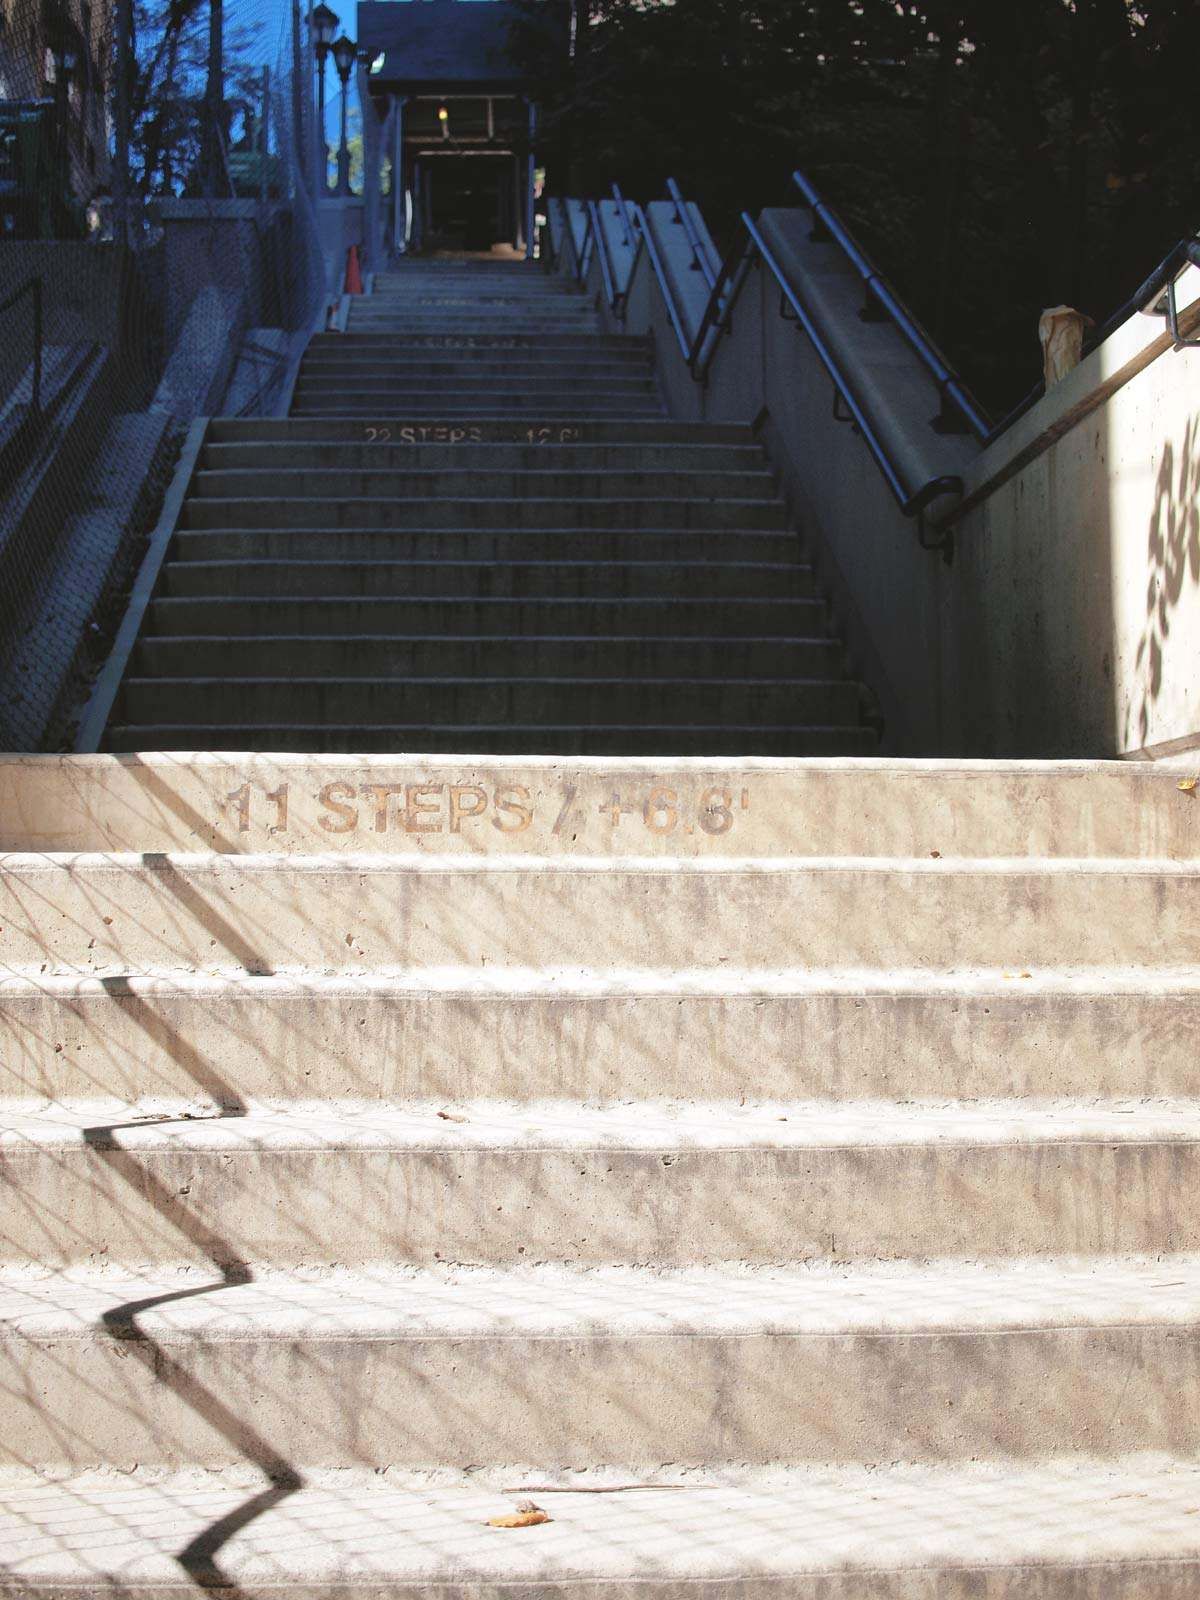 215 Street Stairs